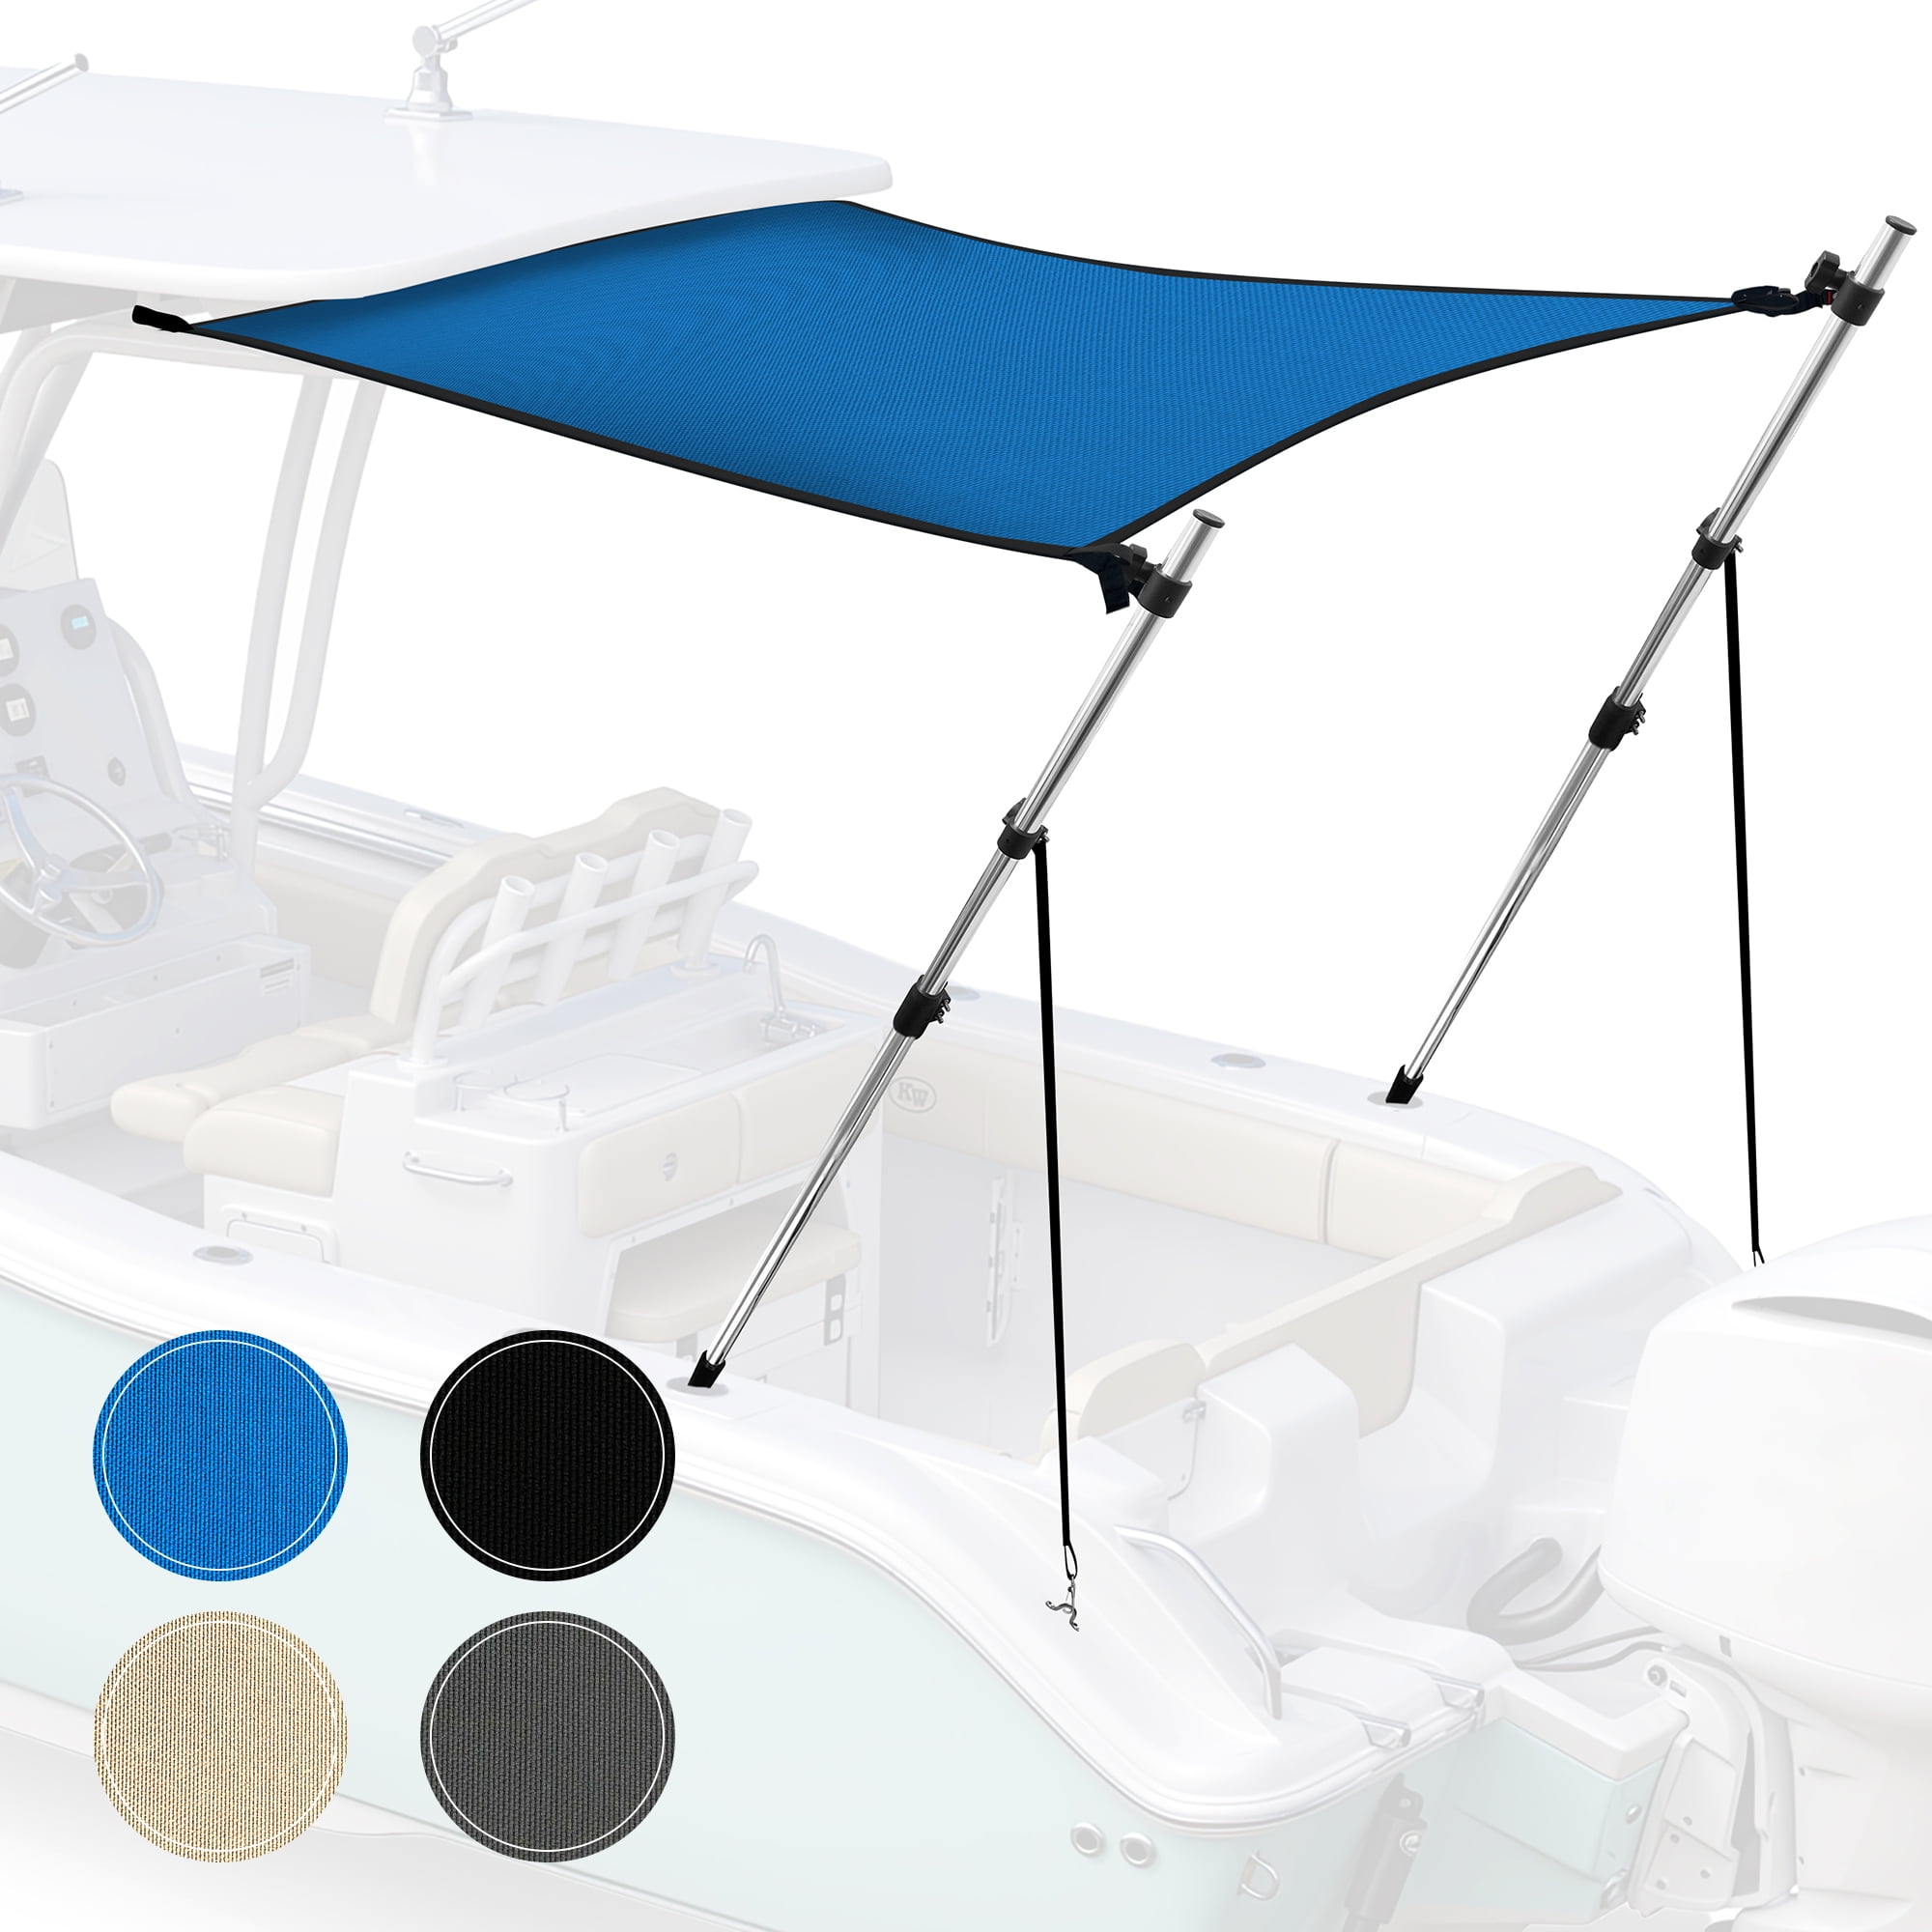 KNOX Universal T-Top Extension Bimini Tops for Boats Sun Shade Kit